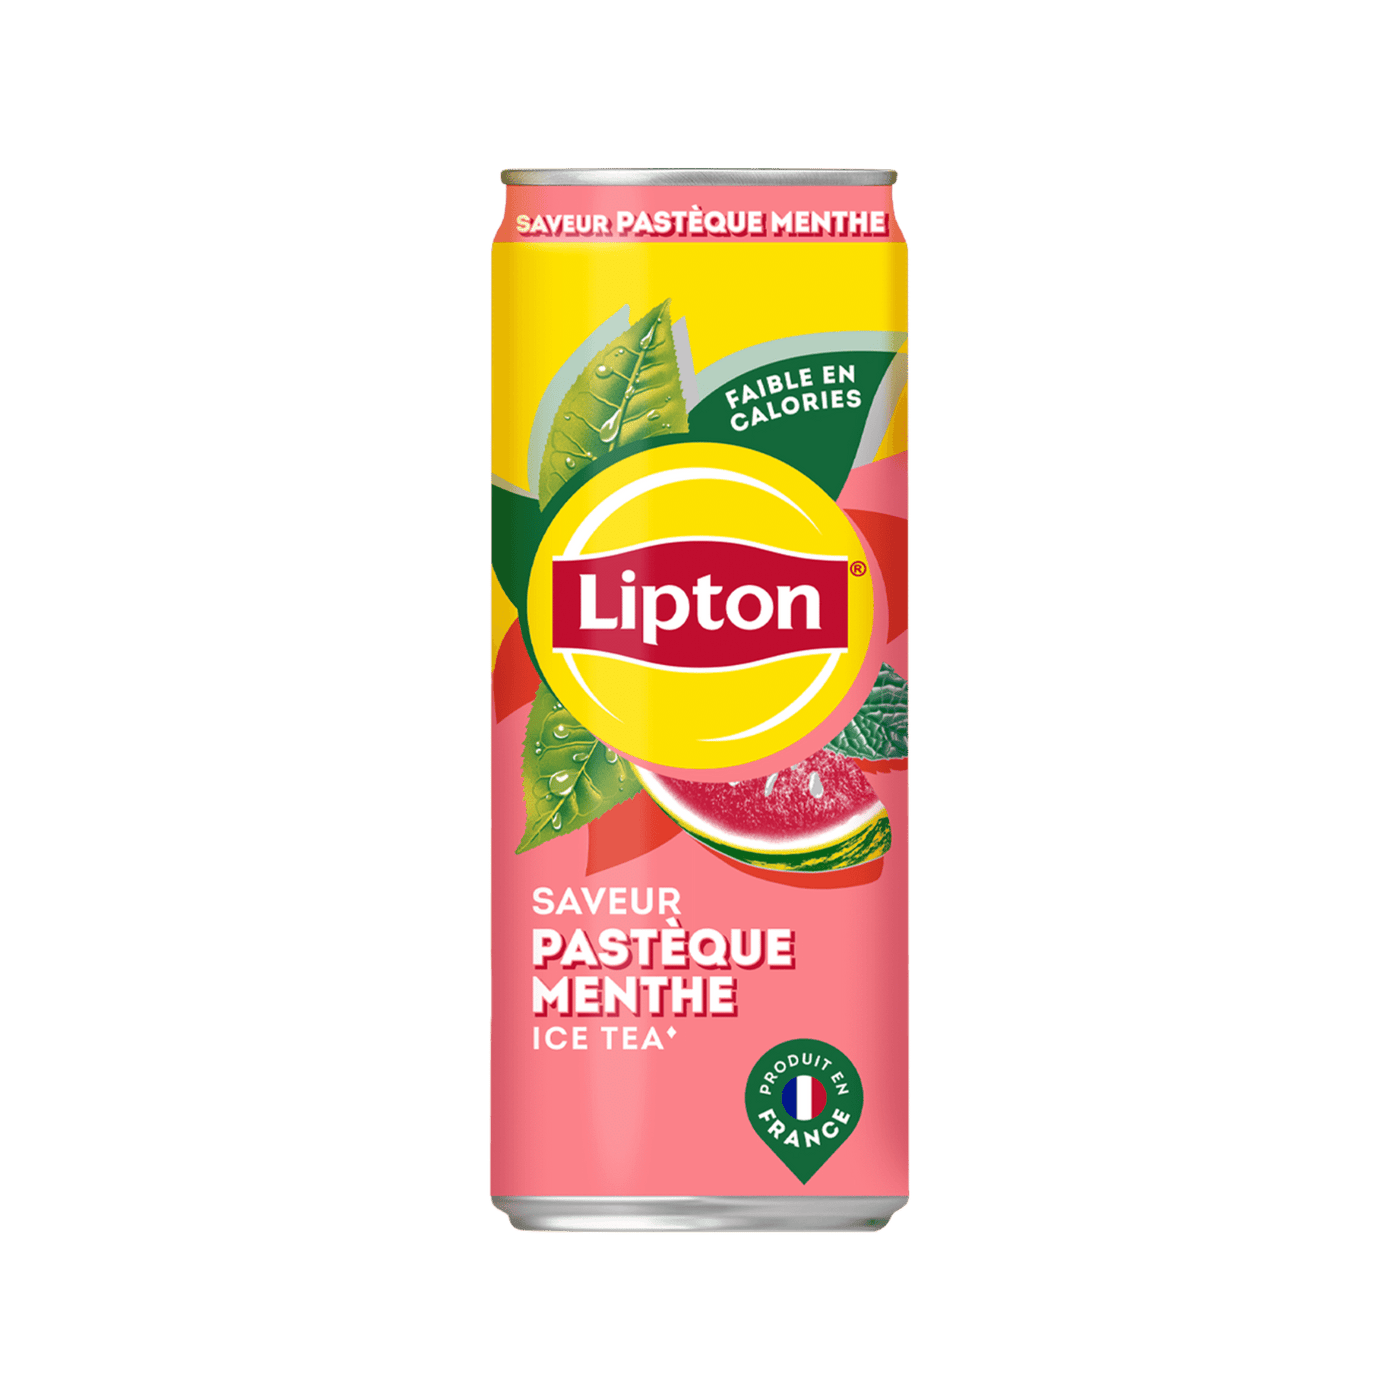 Lipton Ice Tea - Watermelon and mint - France